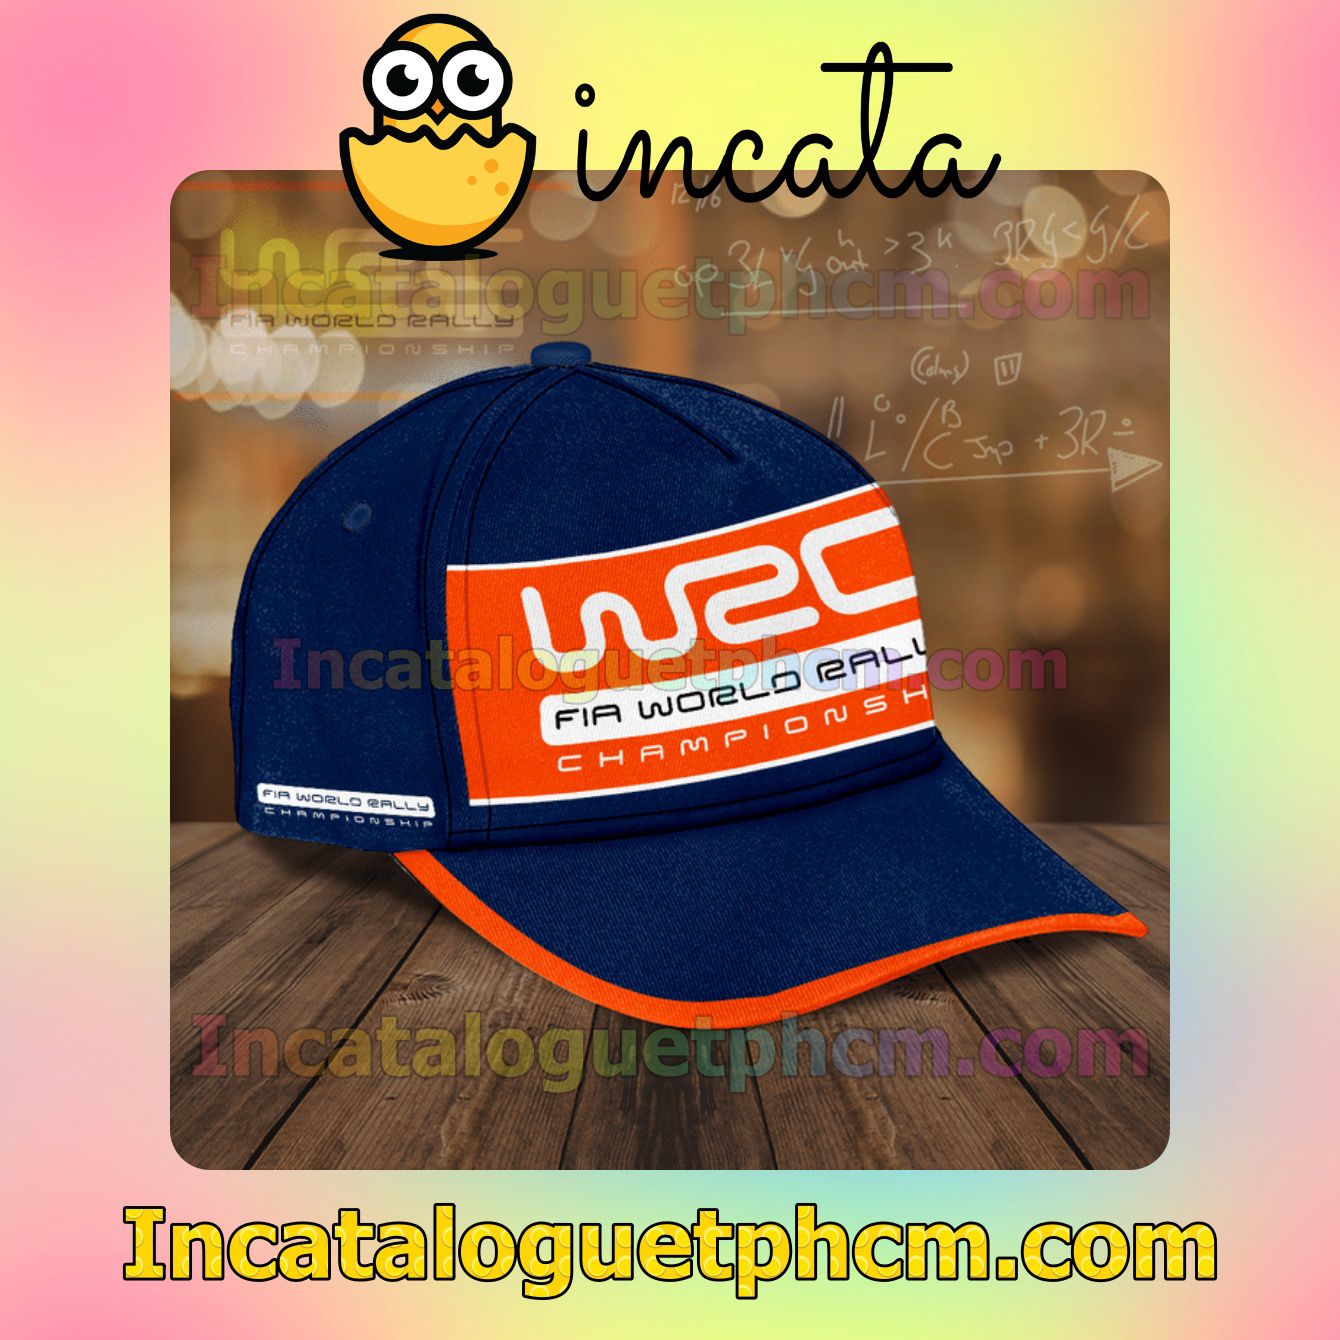 Fantastic Wrc Fia World Rally Championship Orange And Blue Classic Hat Caps Gift For Men